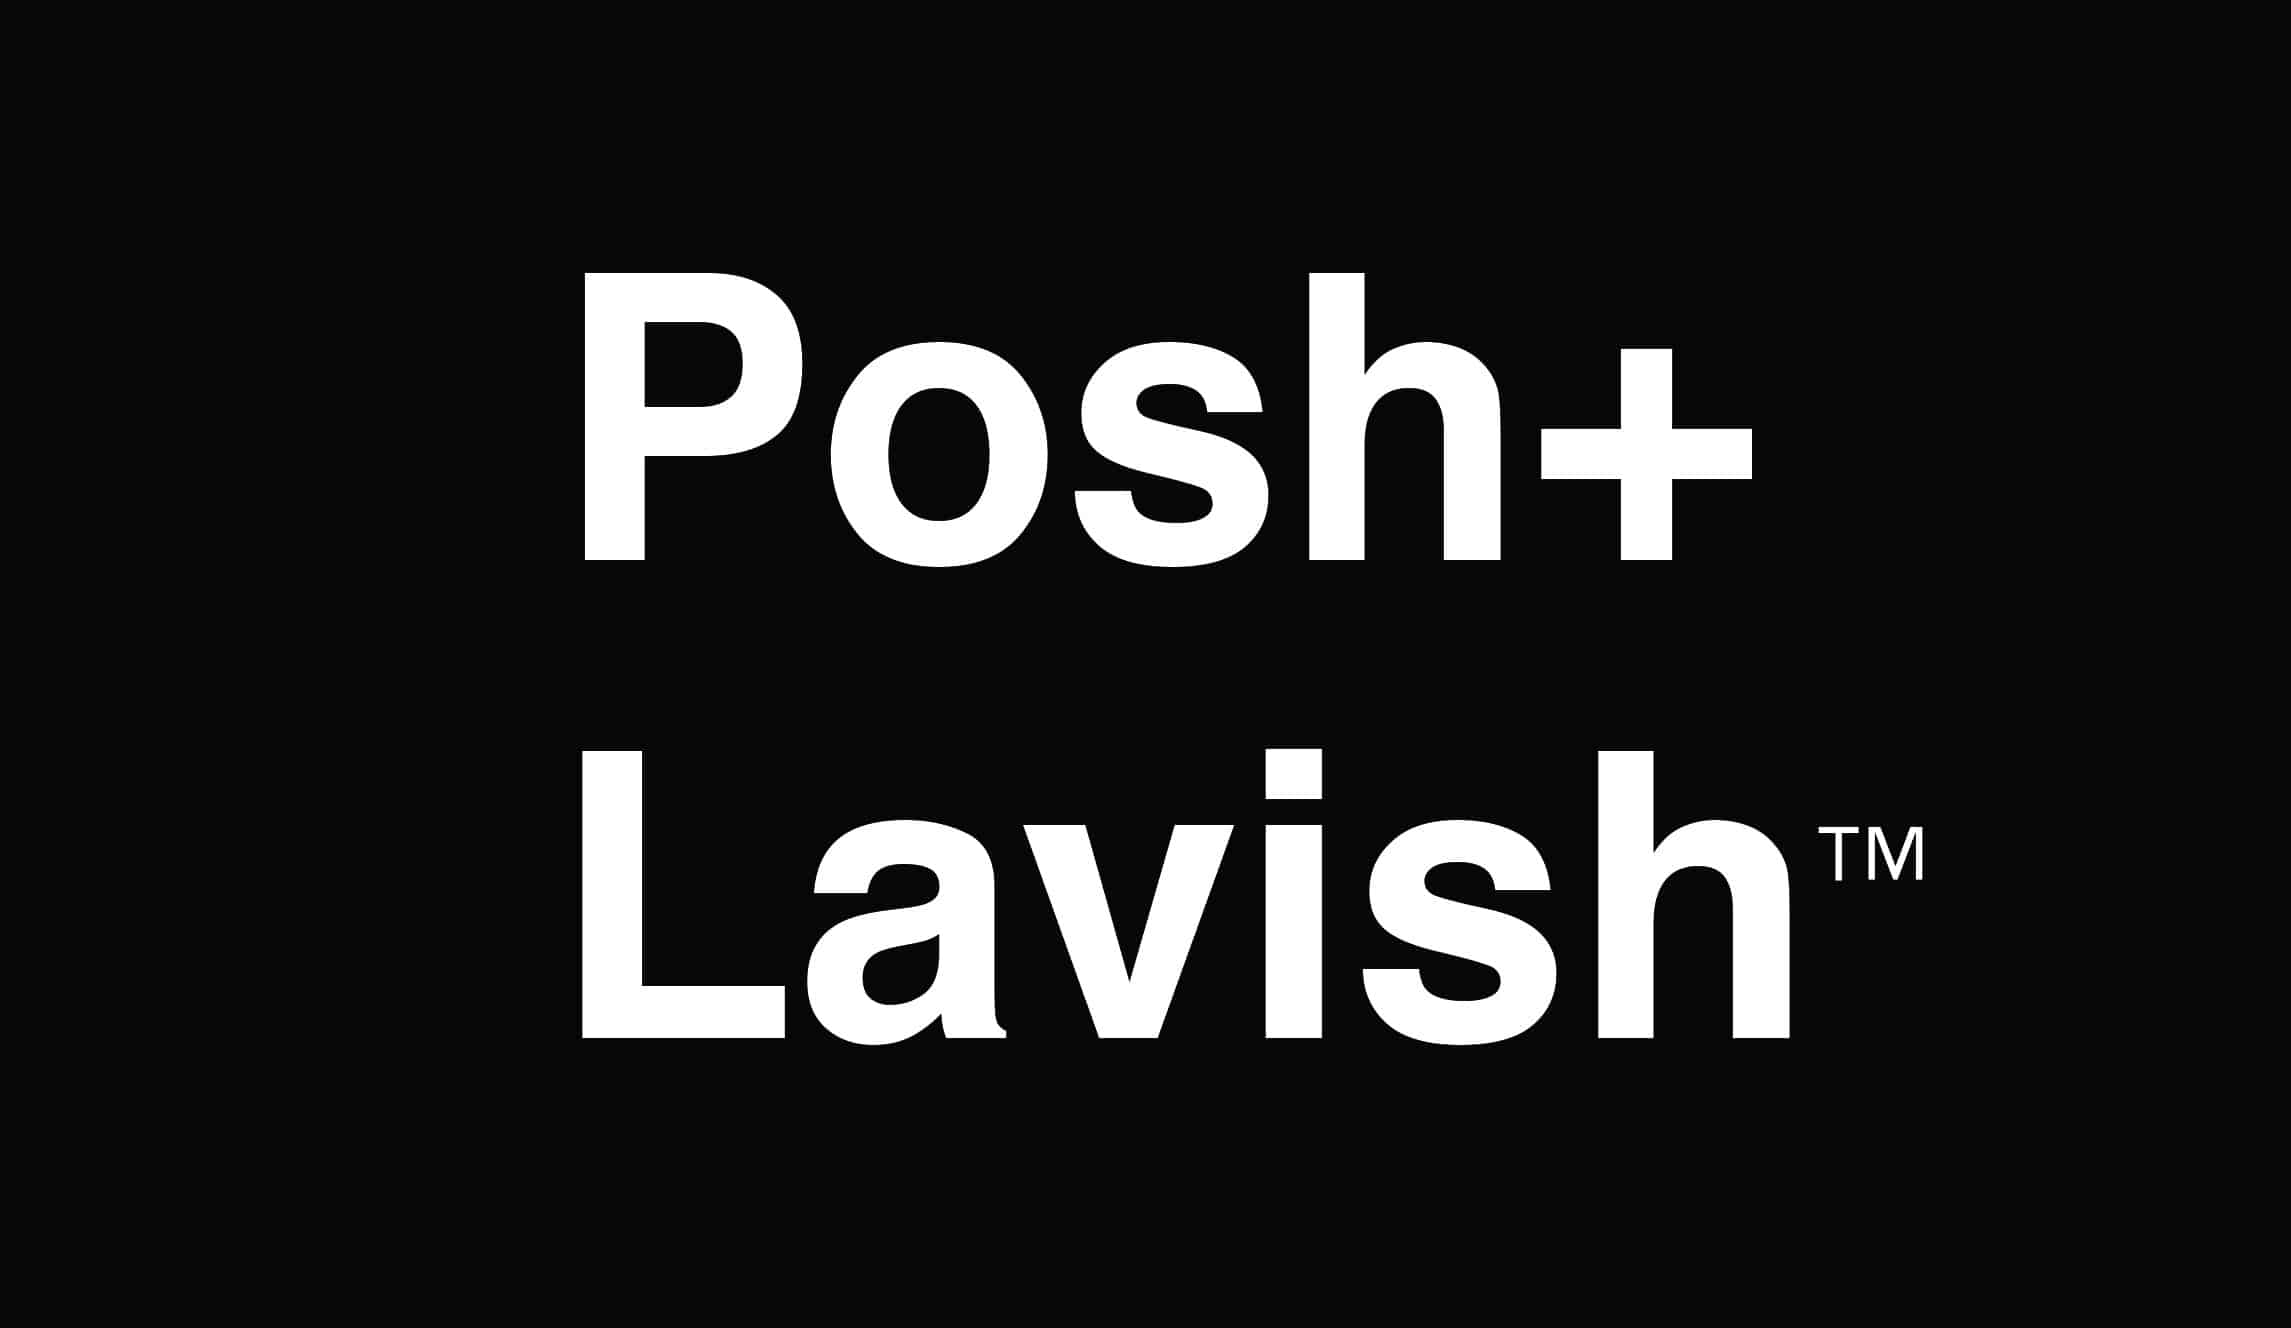 posh + lavish mattress reviews